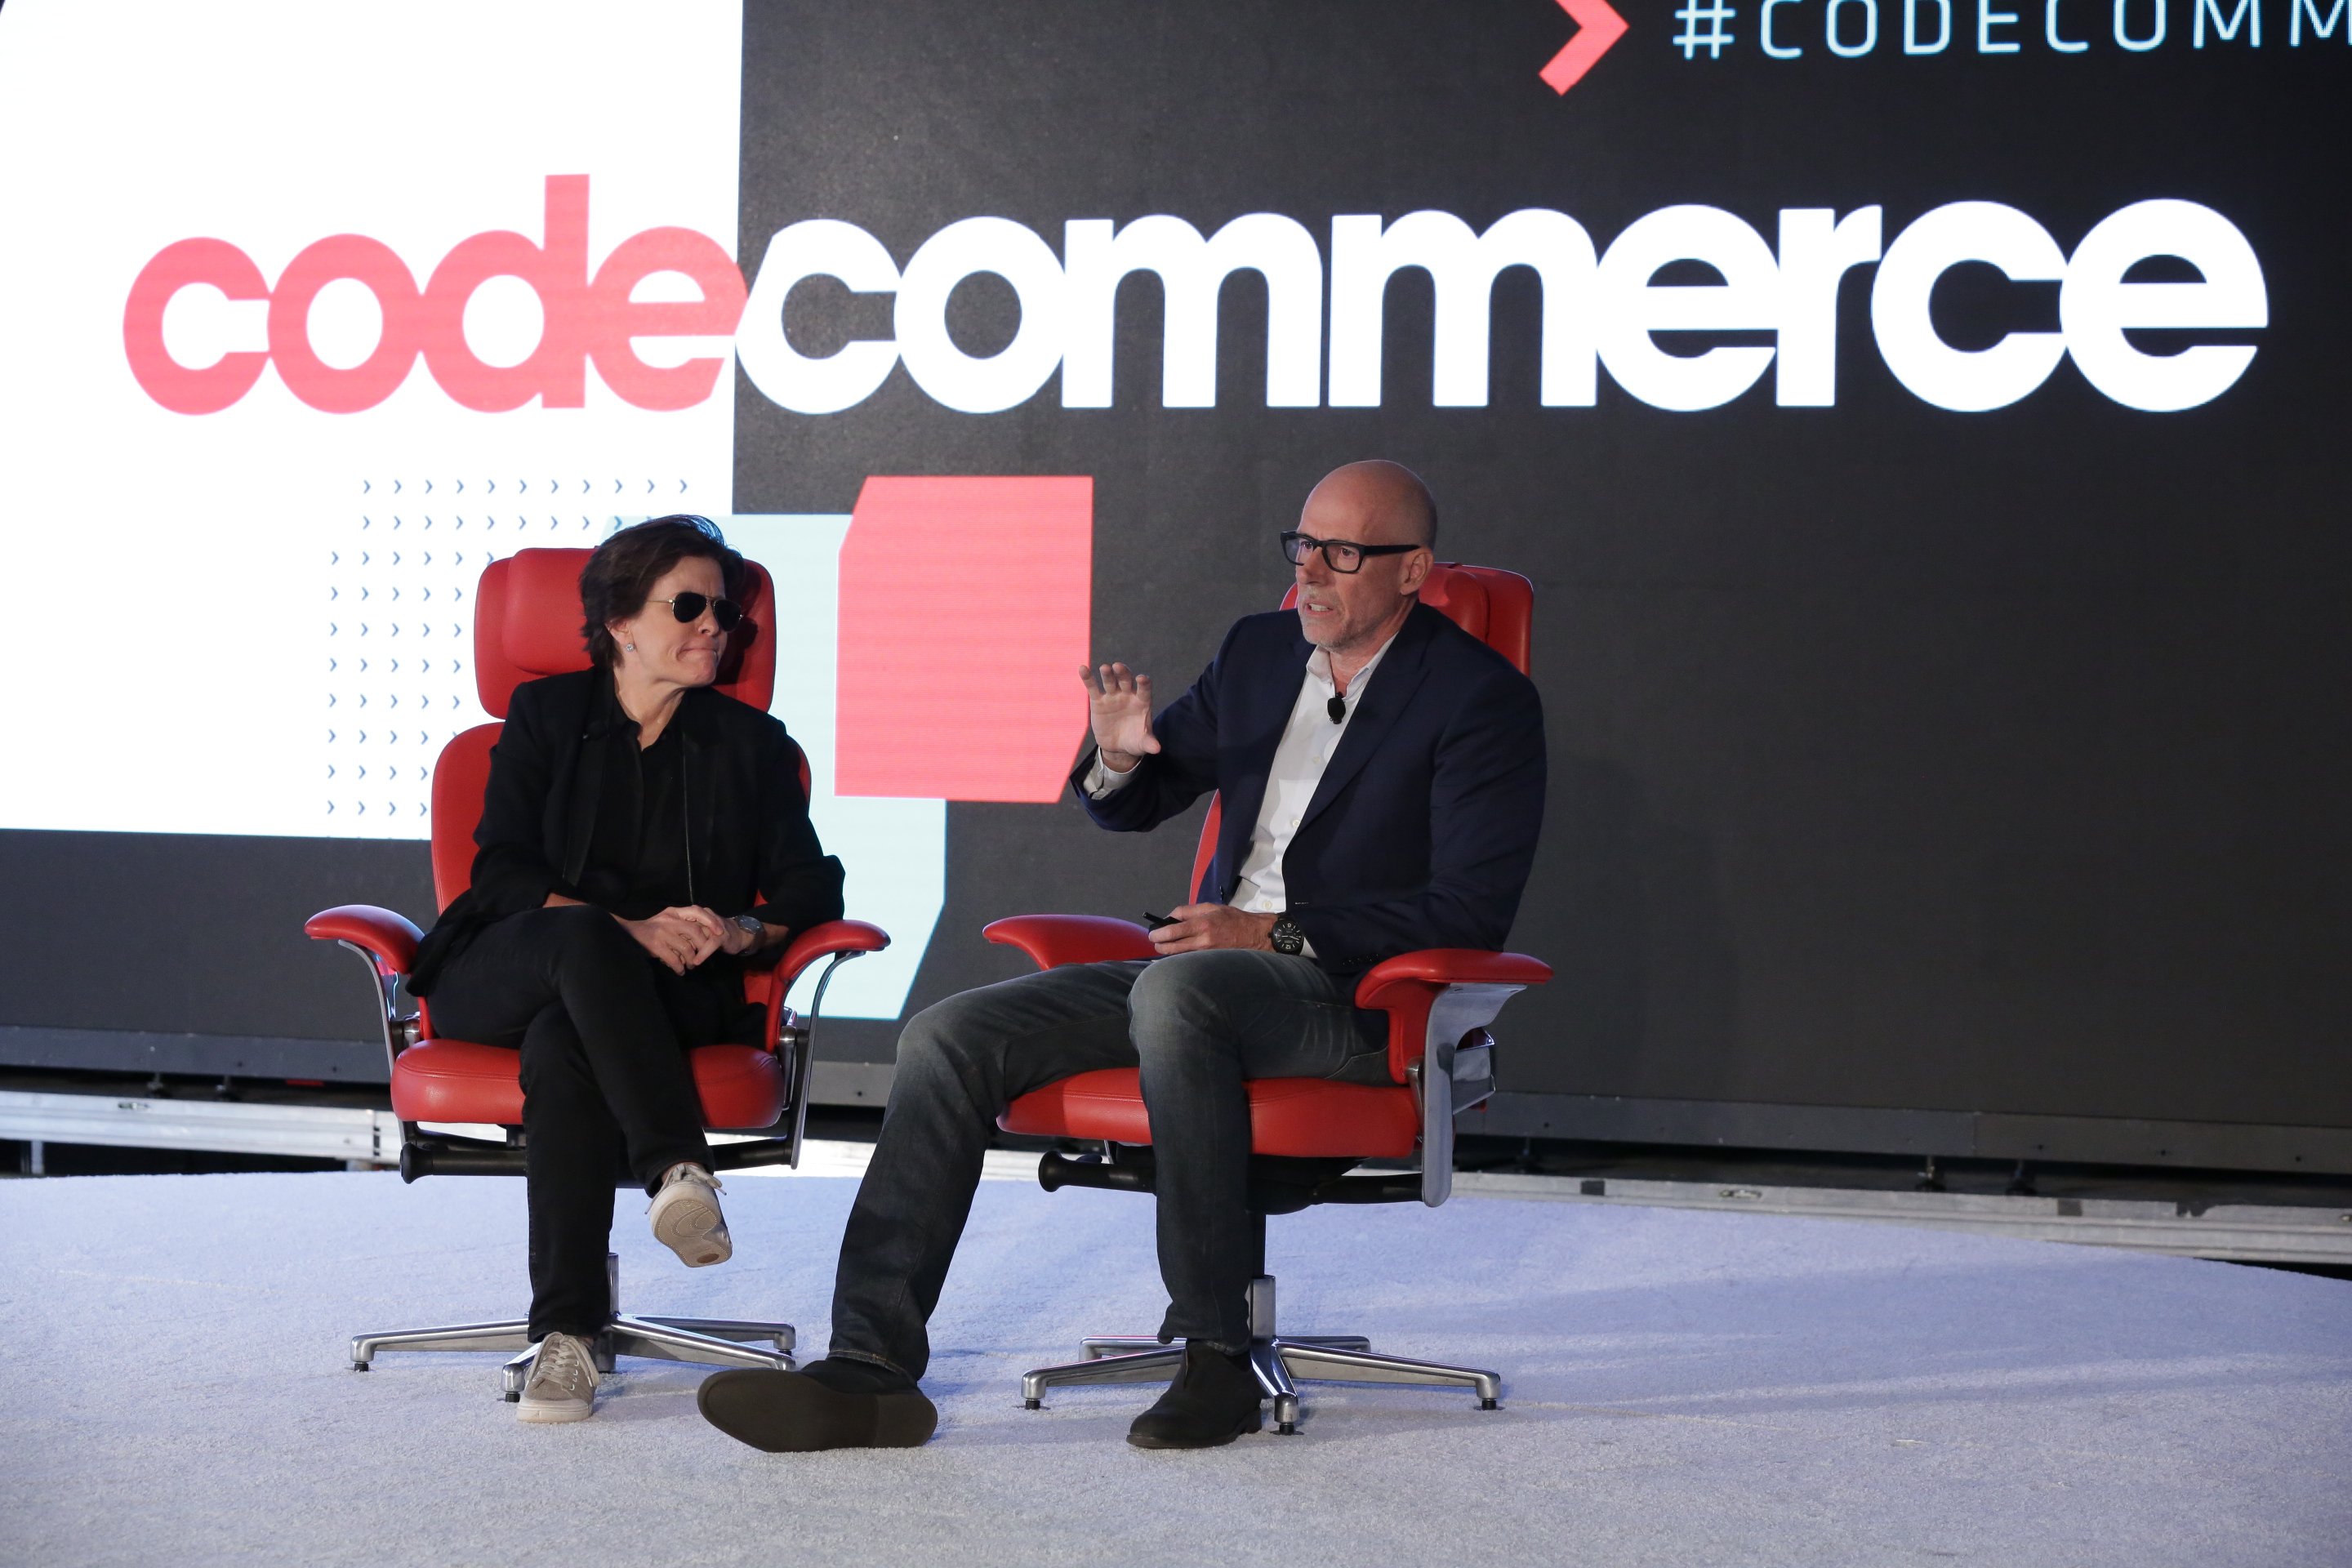 Kara Swisher and Scott Galloway onstage at Code Commerce 2018